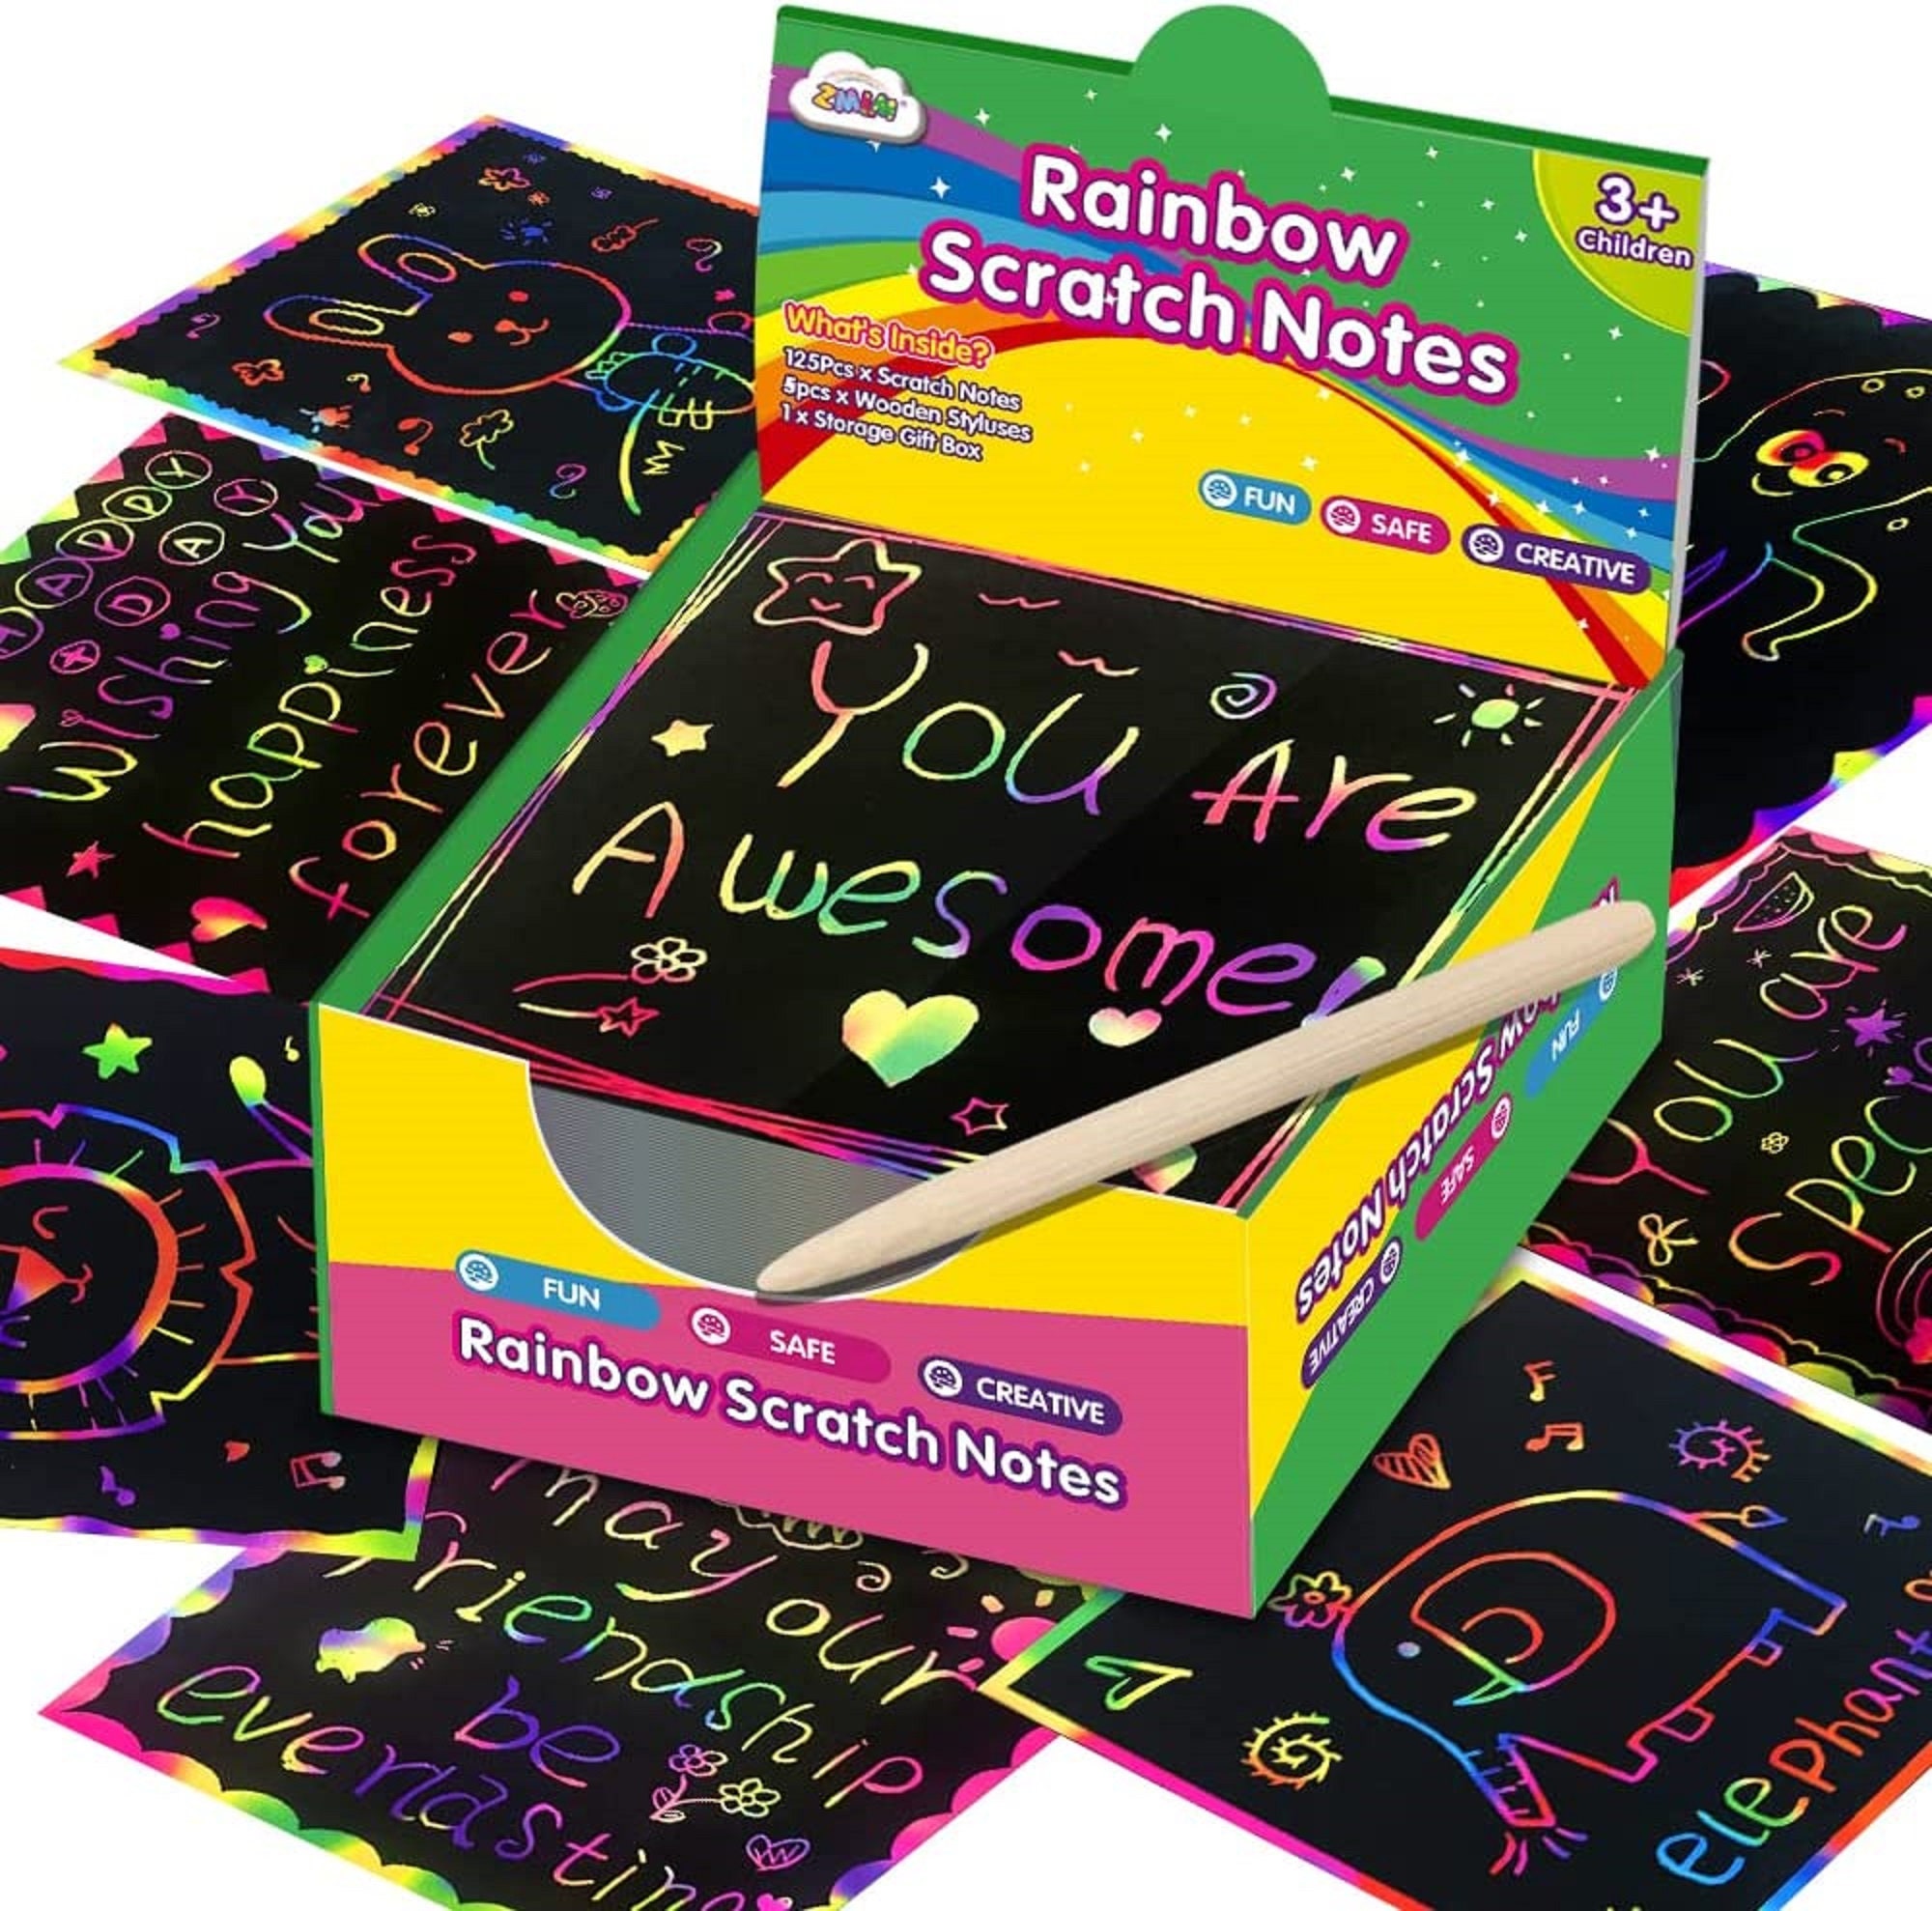 ZMLM Art Craft Kit for Kids: 60 Sheets Magic Rainbow Algeria